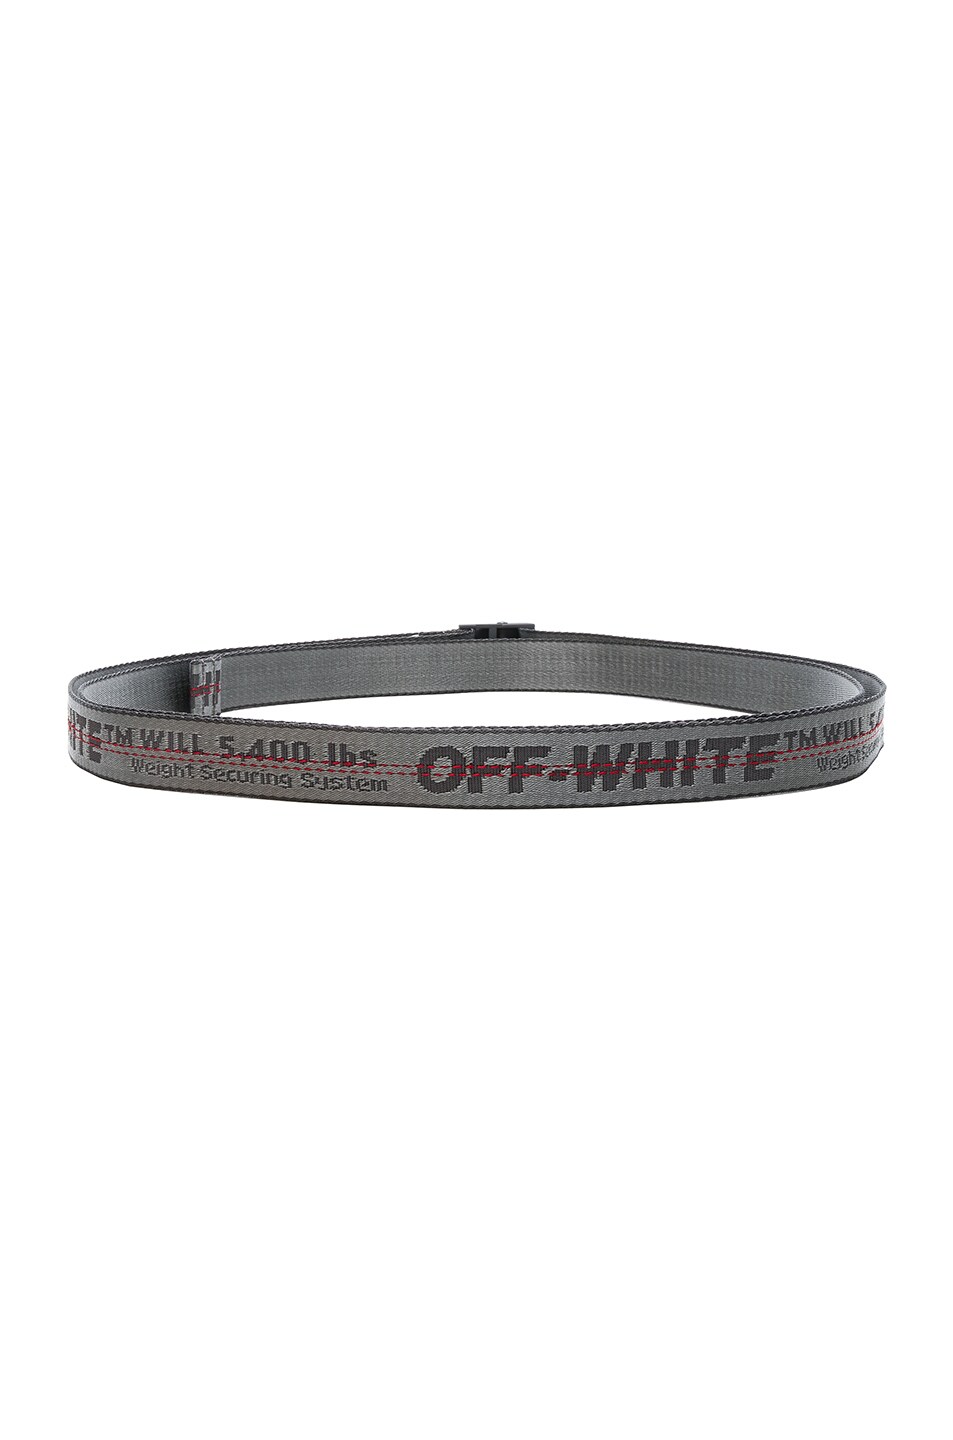 OFF-WHITE Mini Industrial Belt in Medium Grey & Light Grey | FWRD